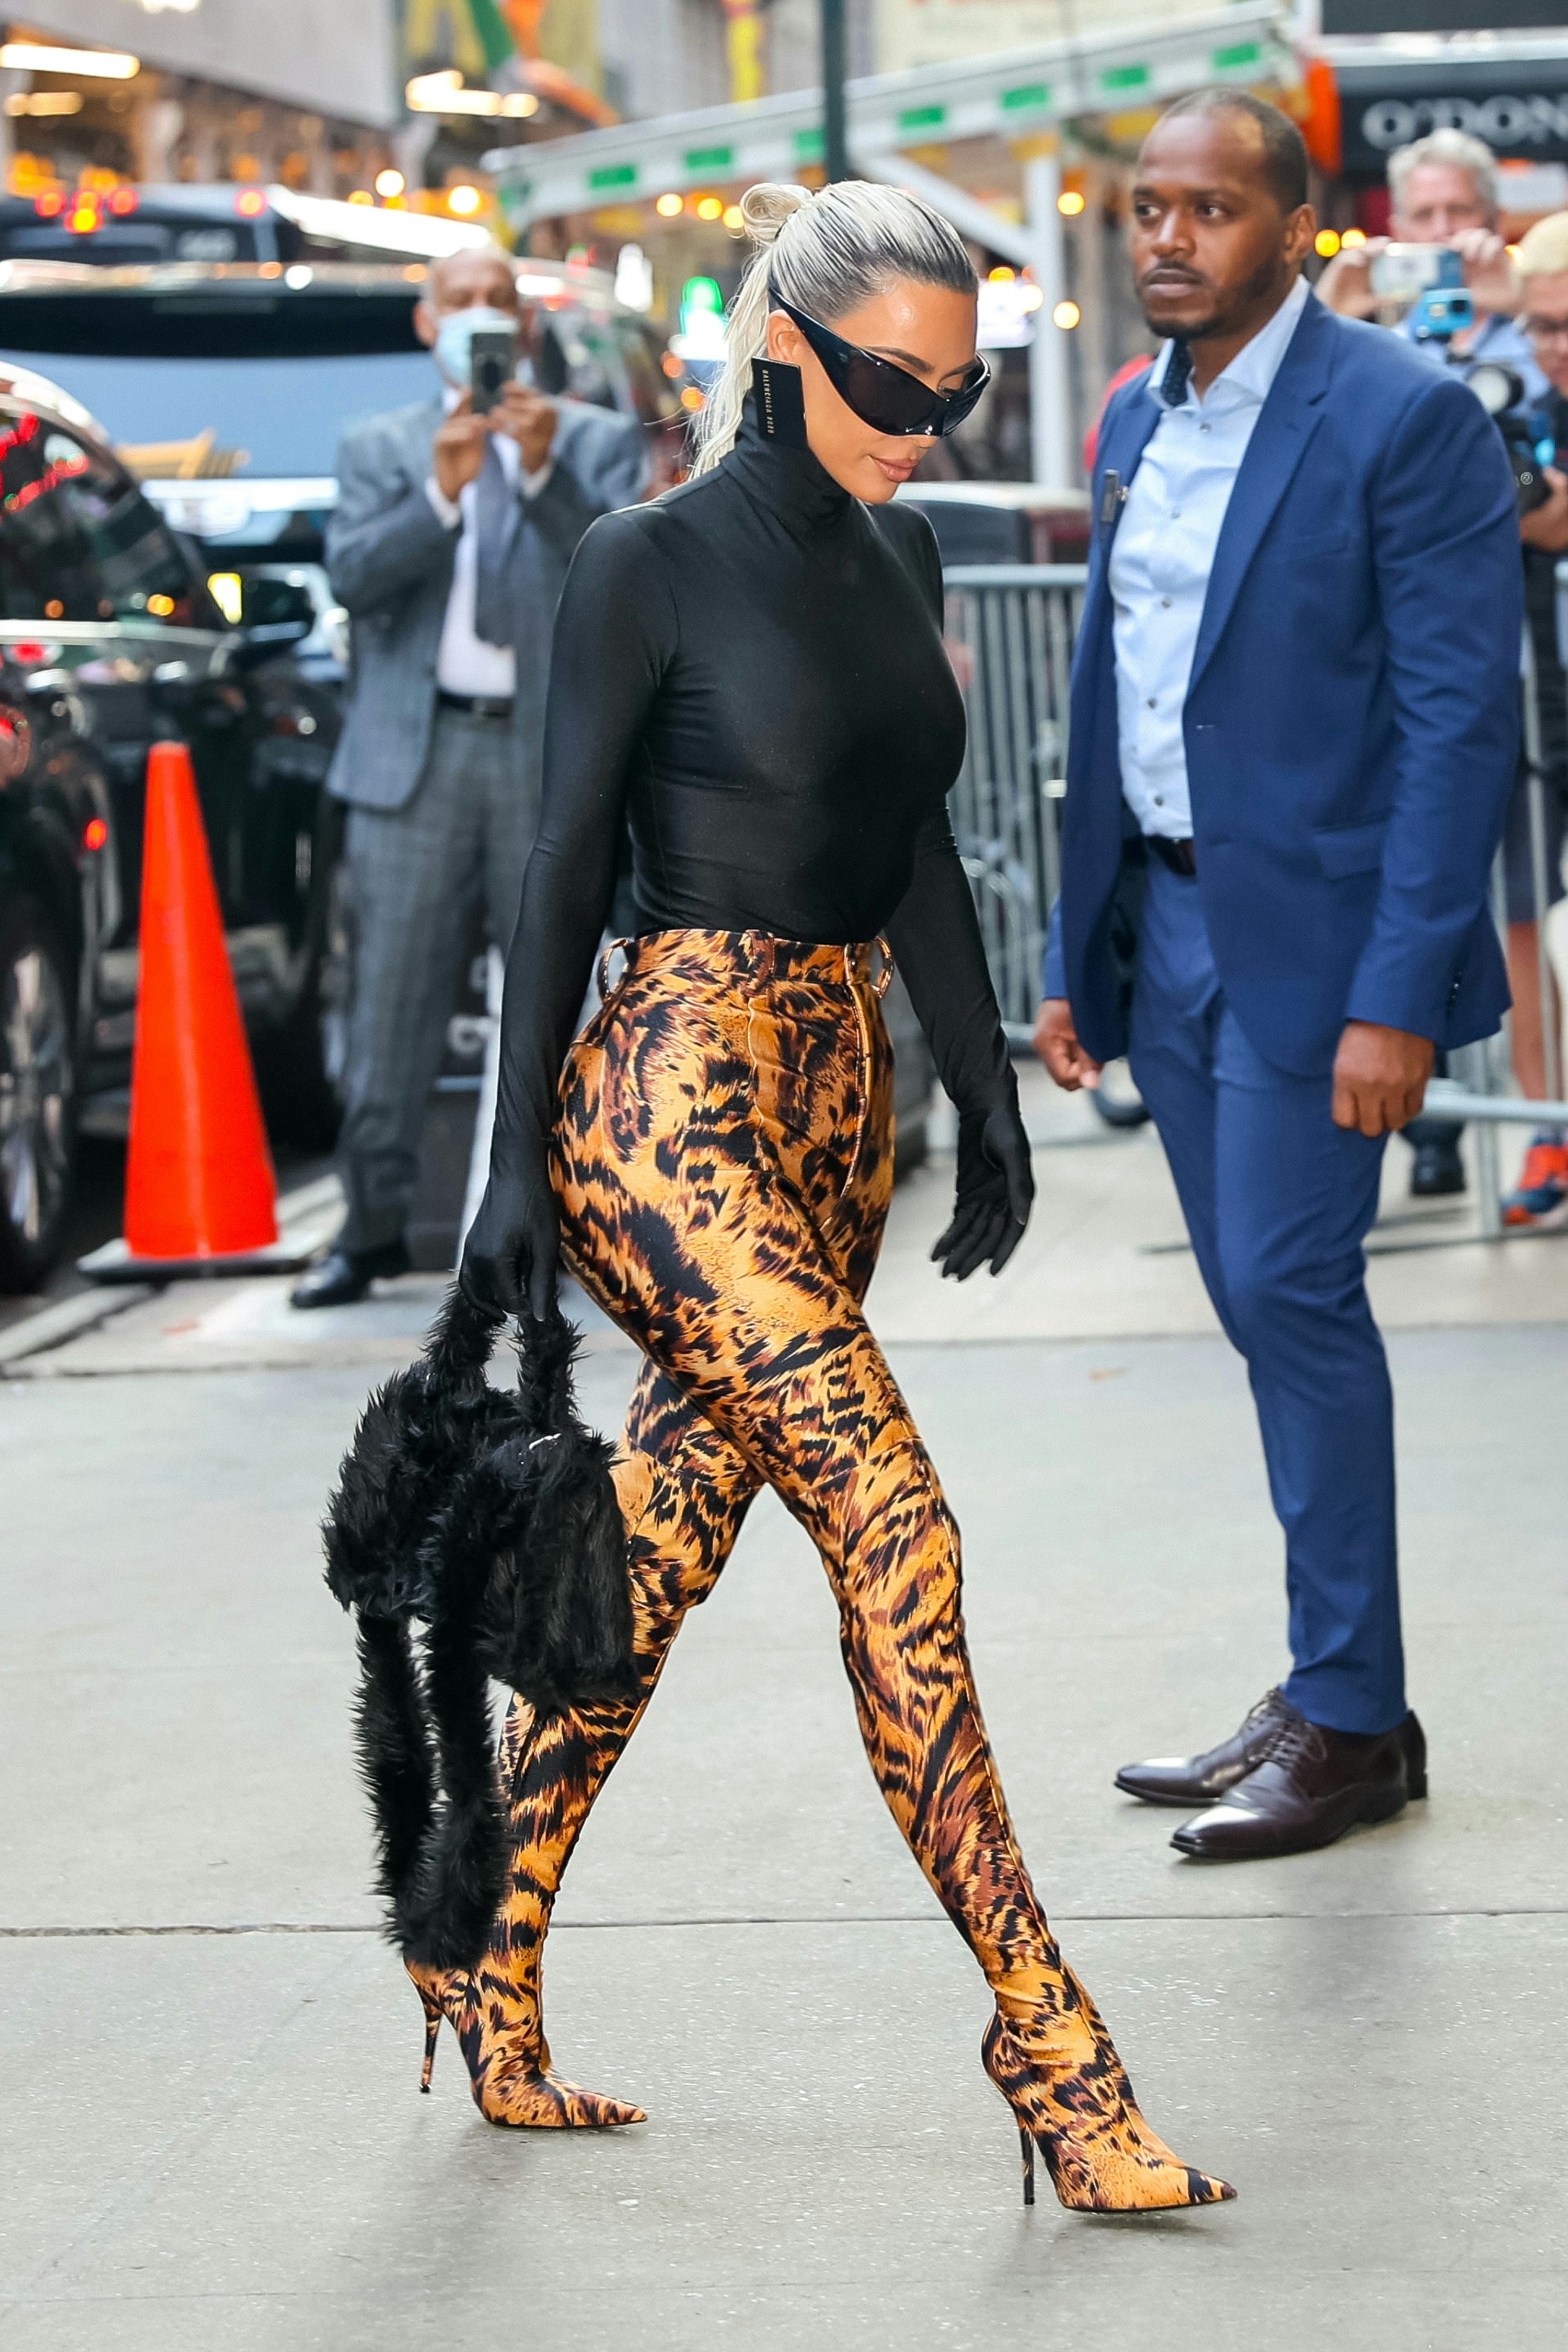 Kim Kardashian wearing Balenciaga again after ad controversy